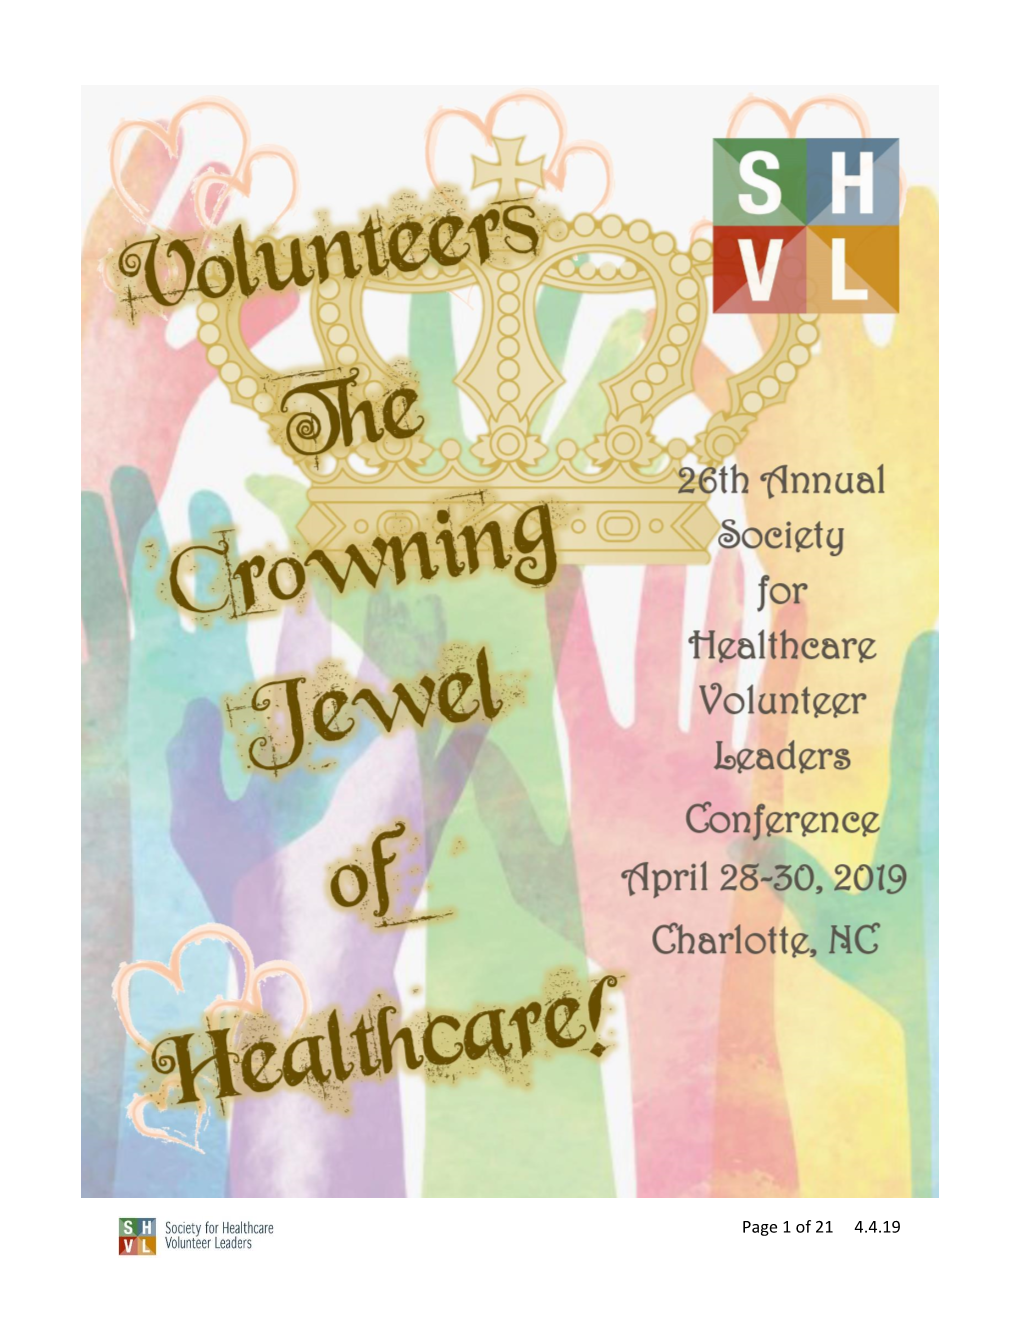 Volunteers – the Crowning Jewel of Healthcare!”